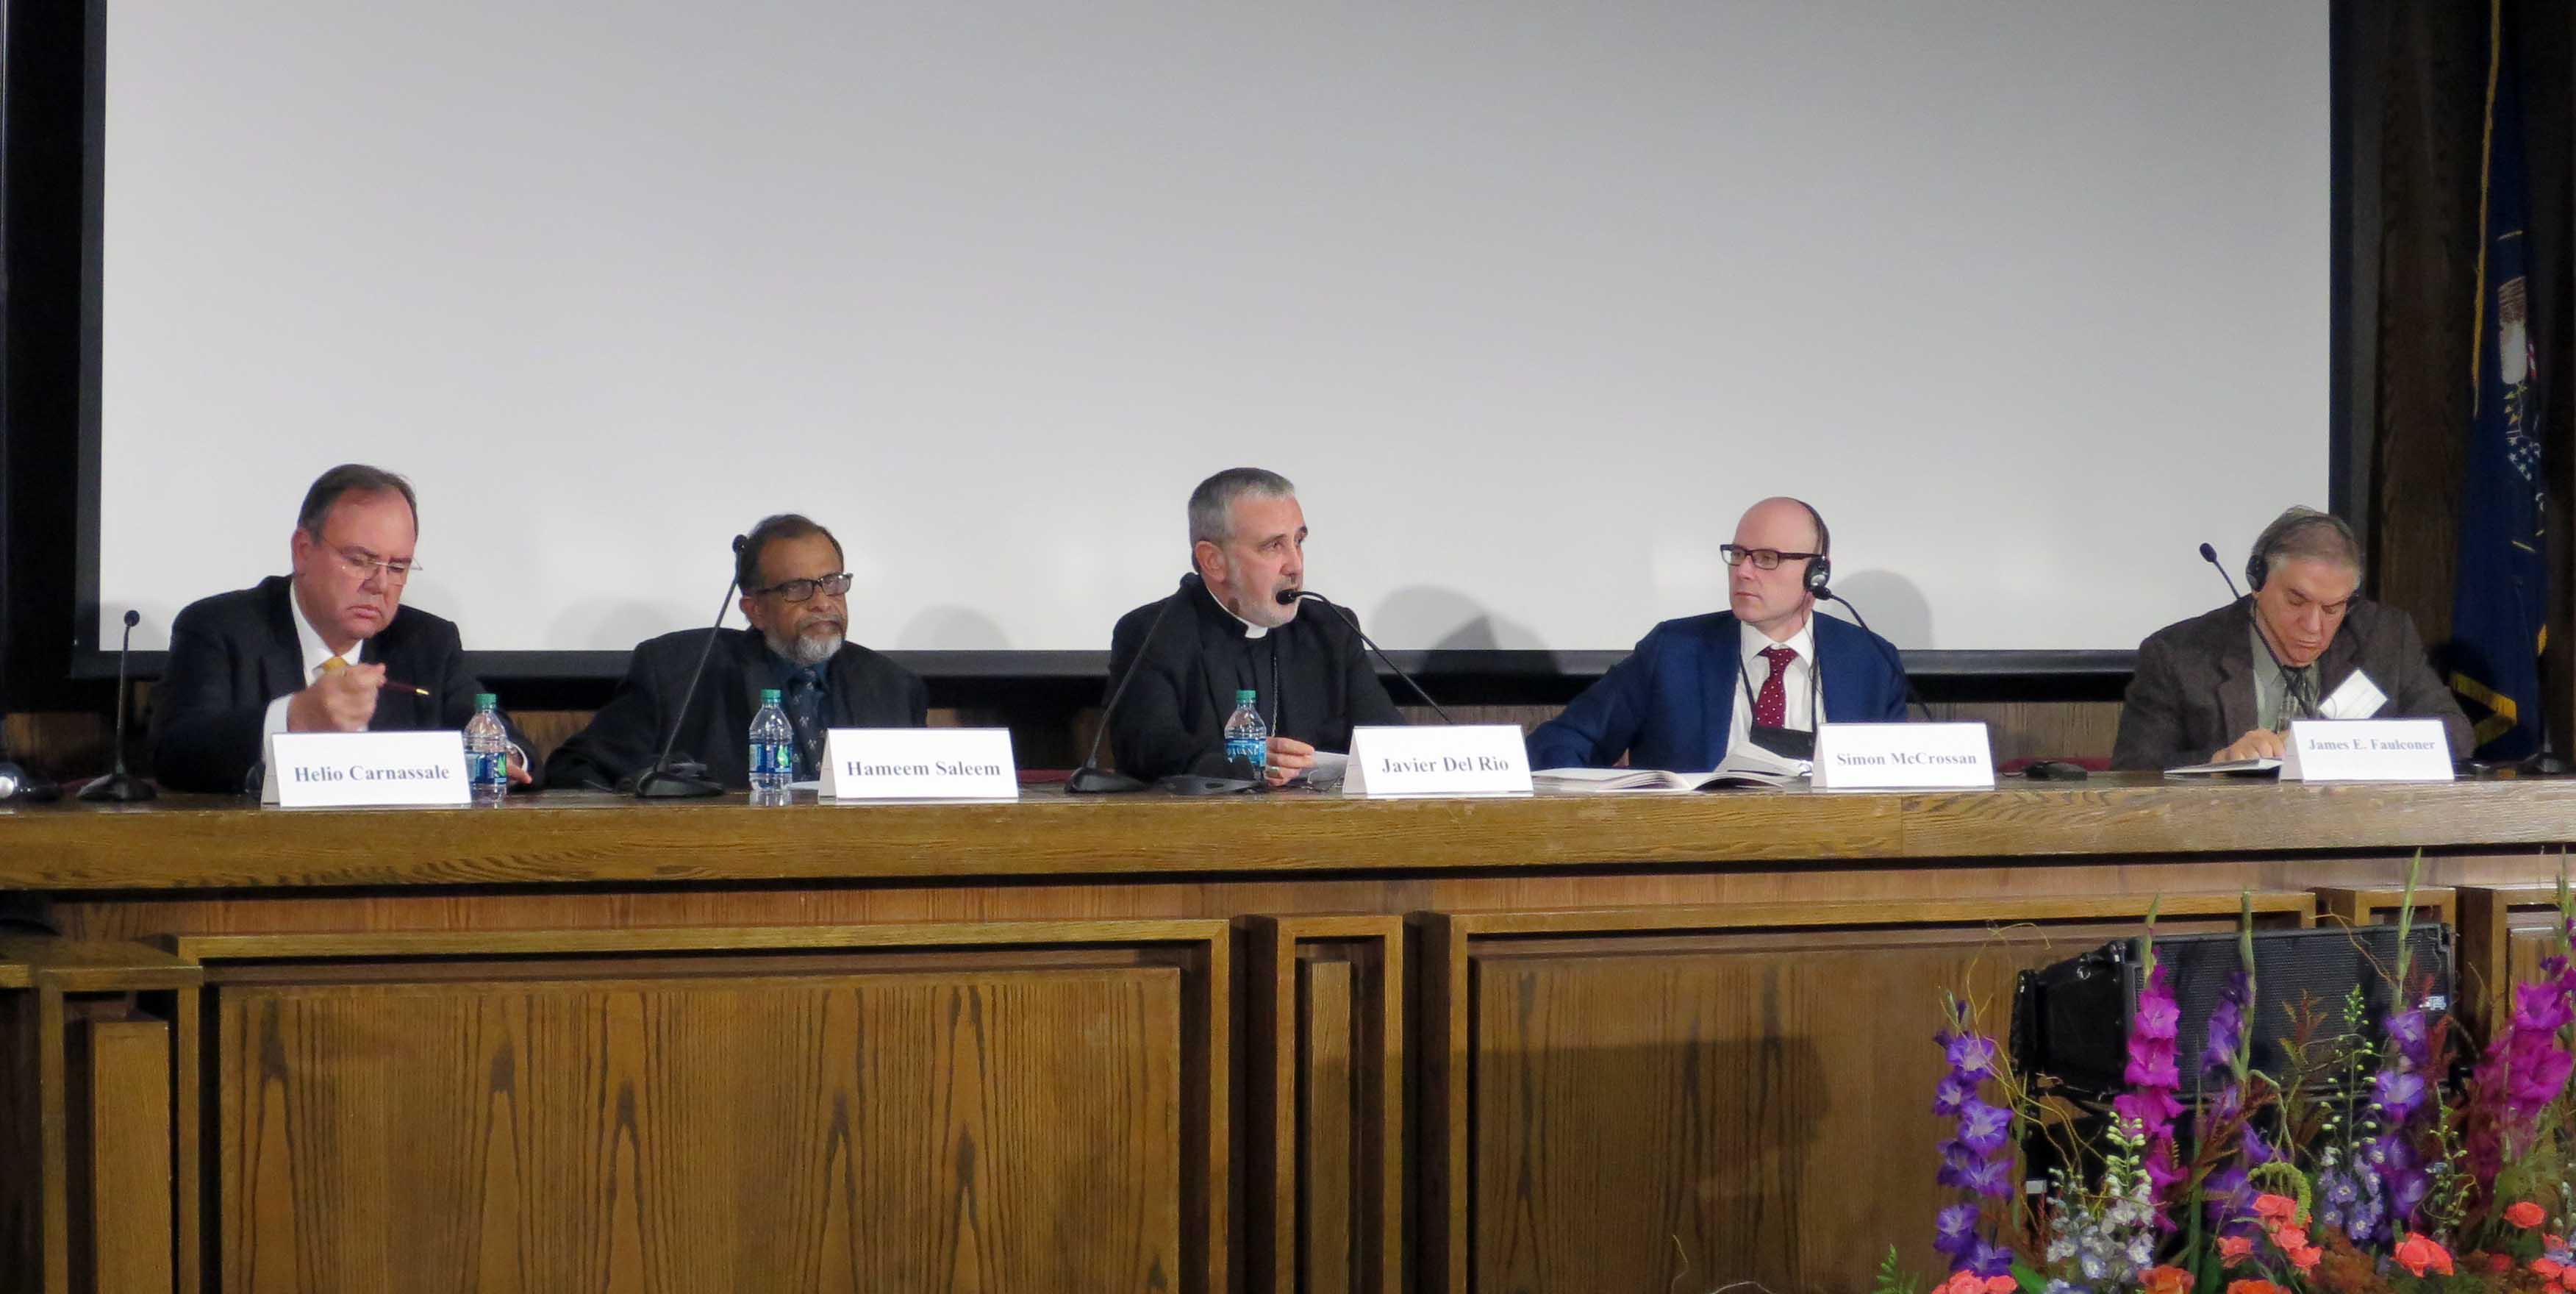 Image for Symposium 2016: Interreligious Cooperation, Religious Rights, and Pluralism (Session One)